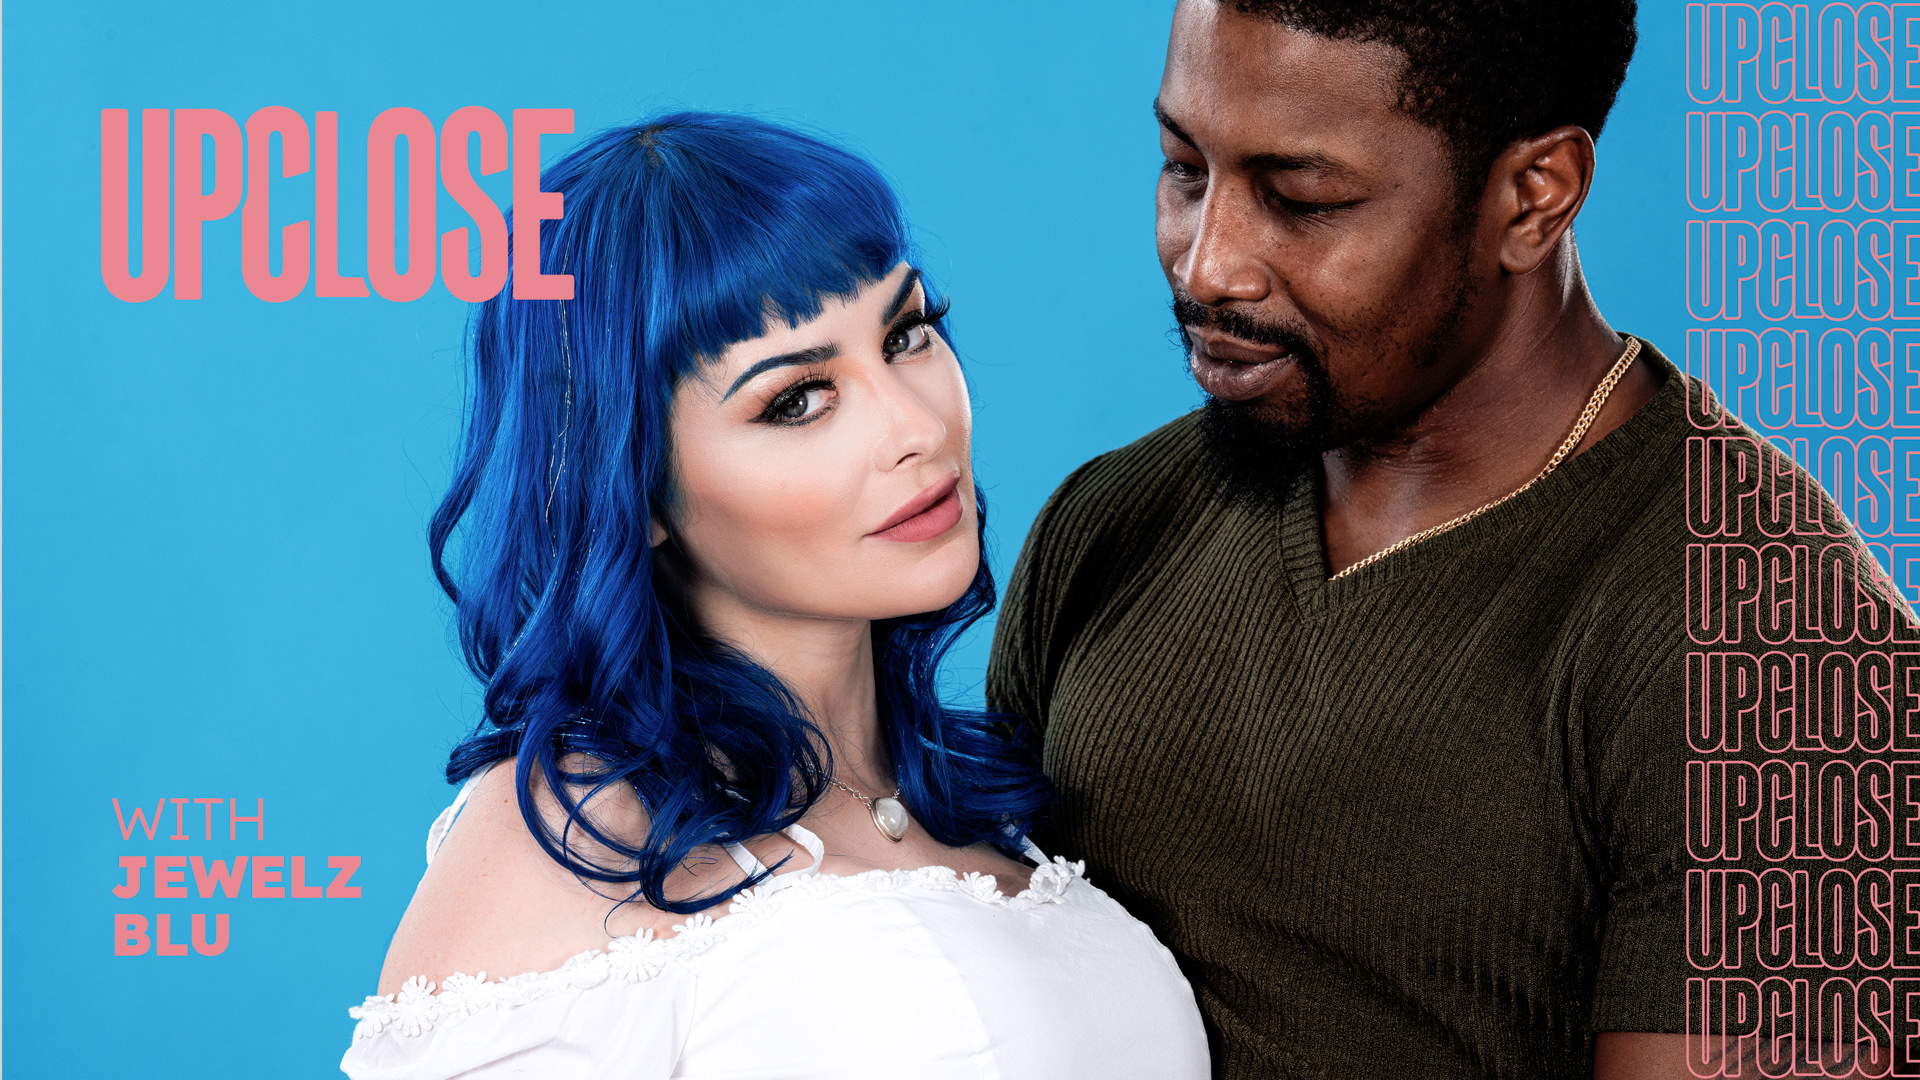 AdultTime UpClose Isiah Maxwell, Jewelz Blu – Up Close With Jewelz Blu